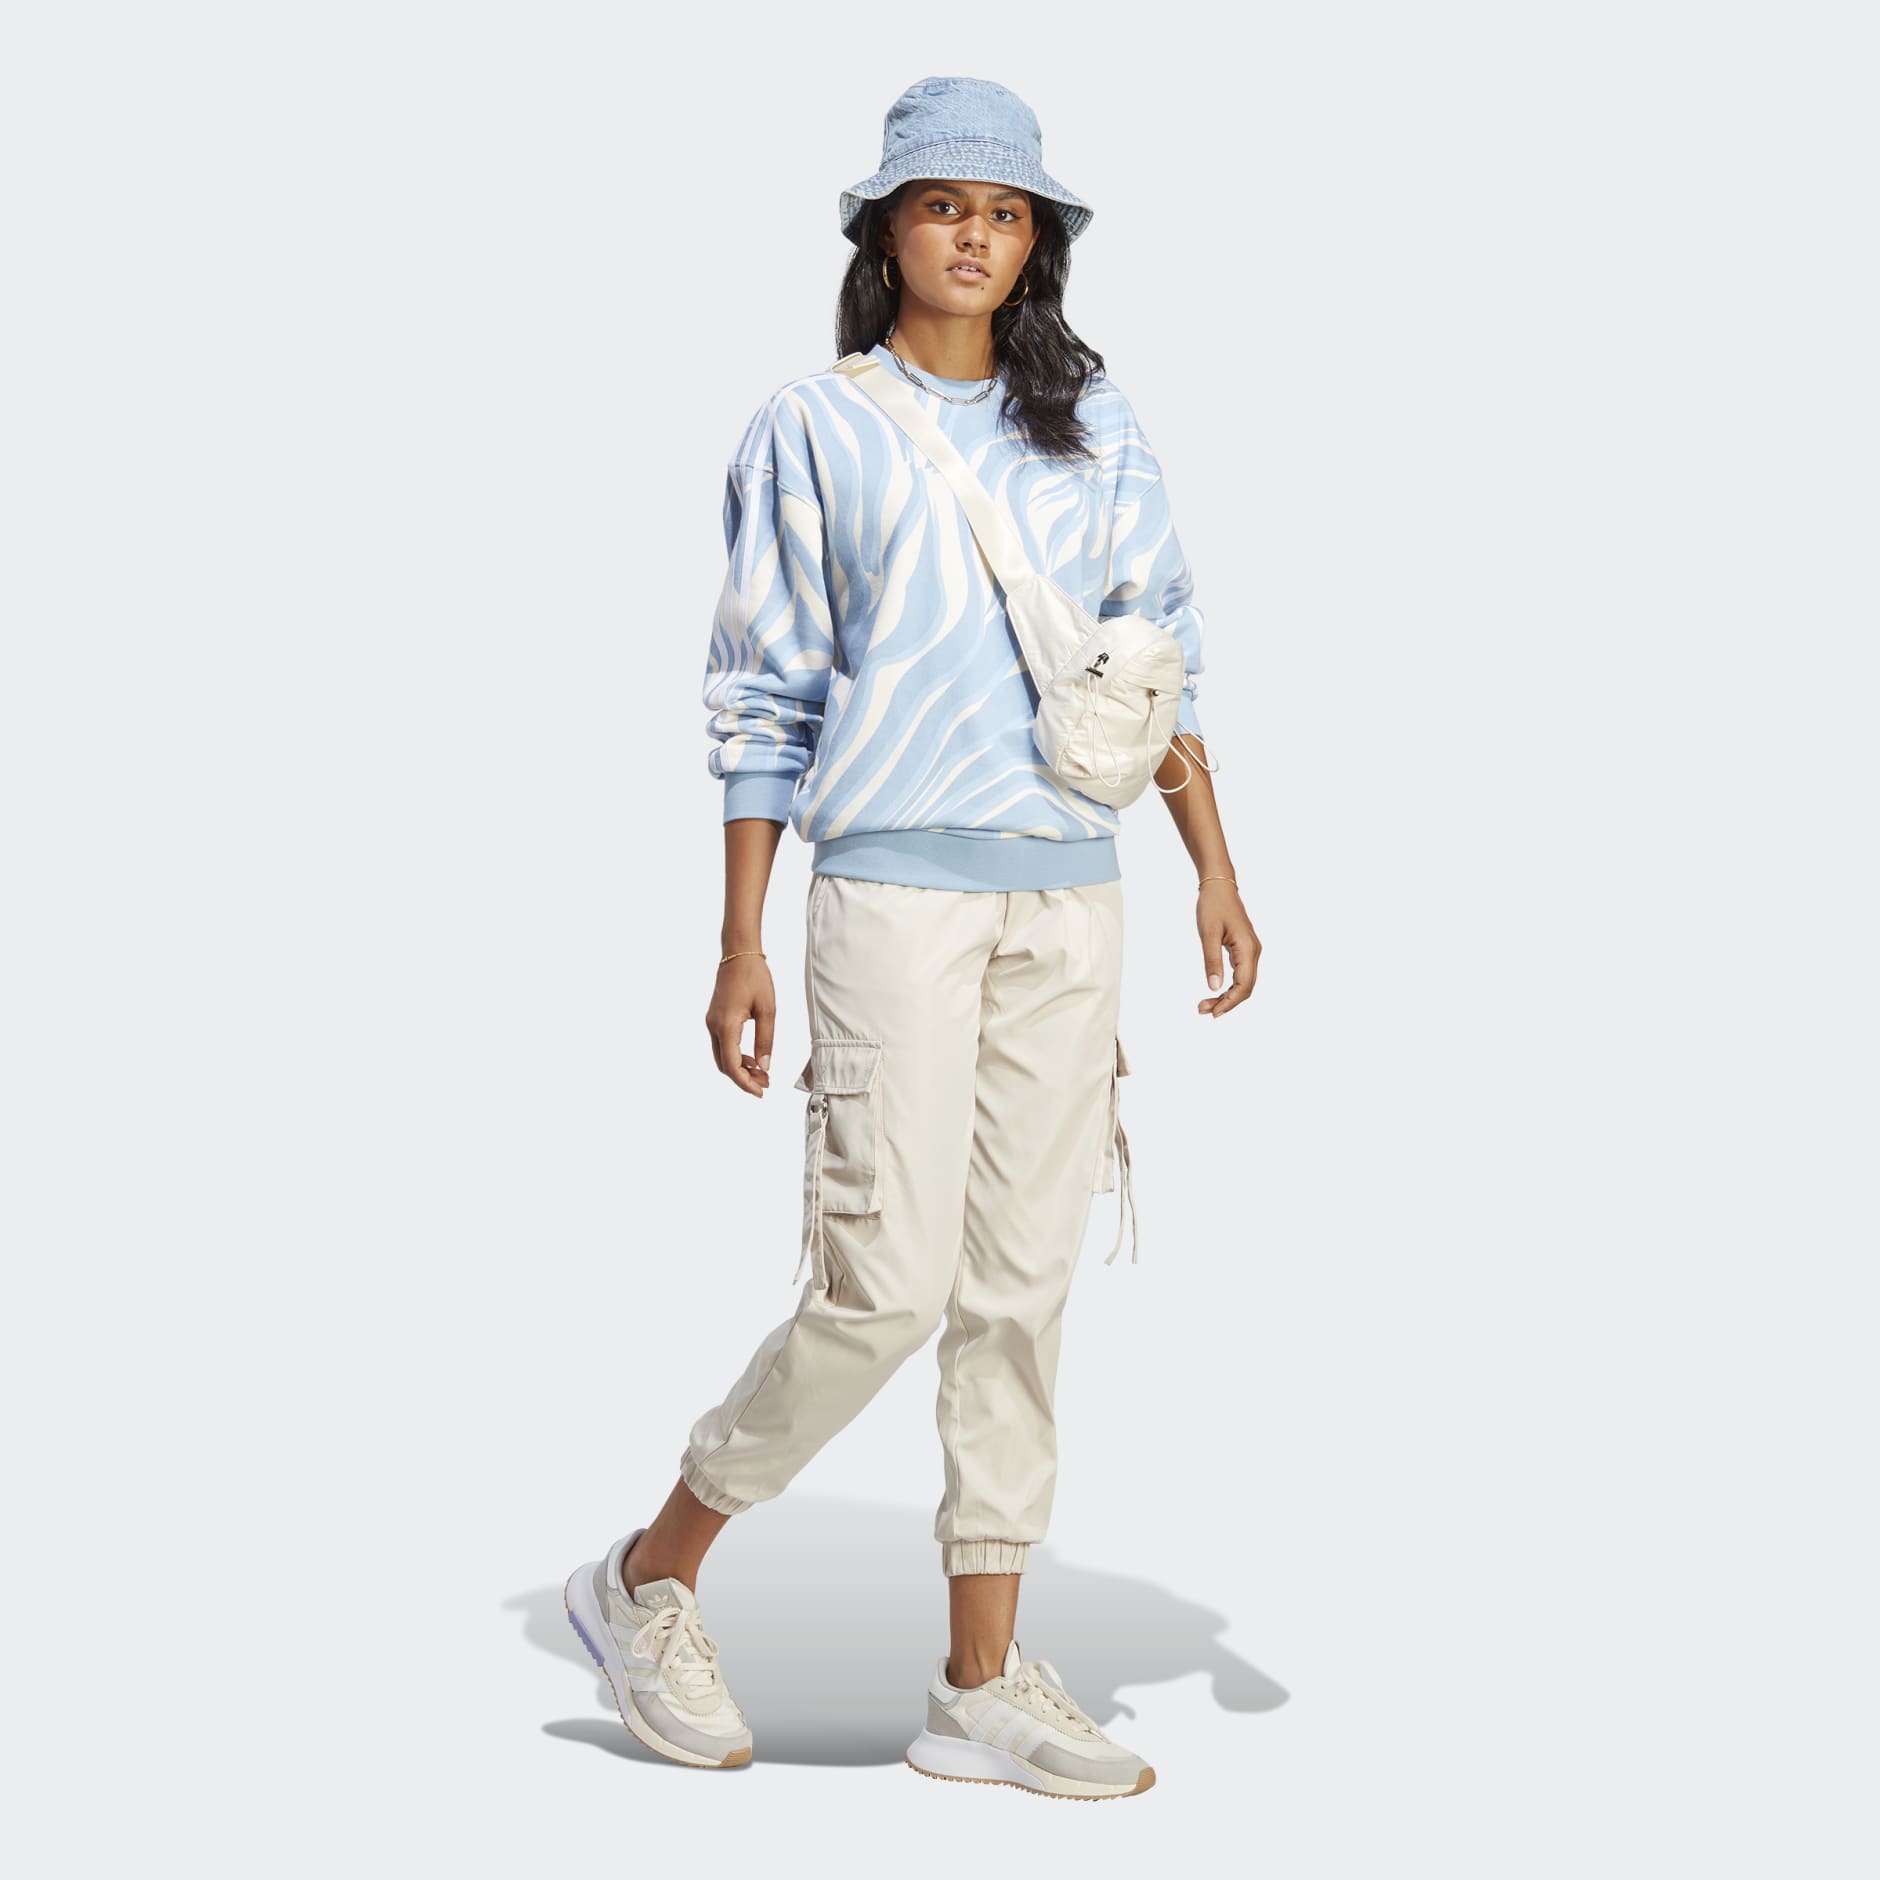 too tiny Yeezy slides and a Louis Vuitton suit - adidas Originals Adicolor  Seasonal Archive Half - Zip Crew Sweatshirt Semi Lucid Blue / White HR8941